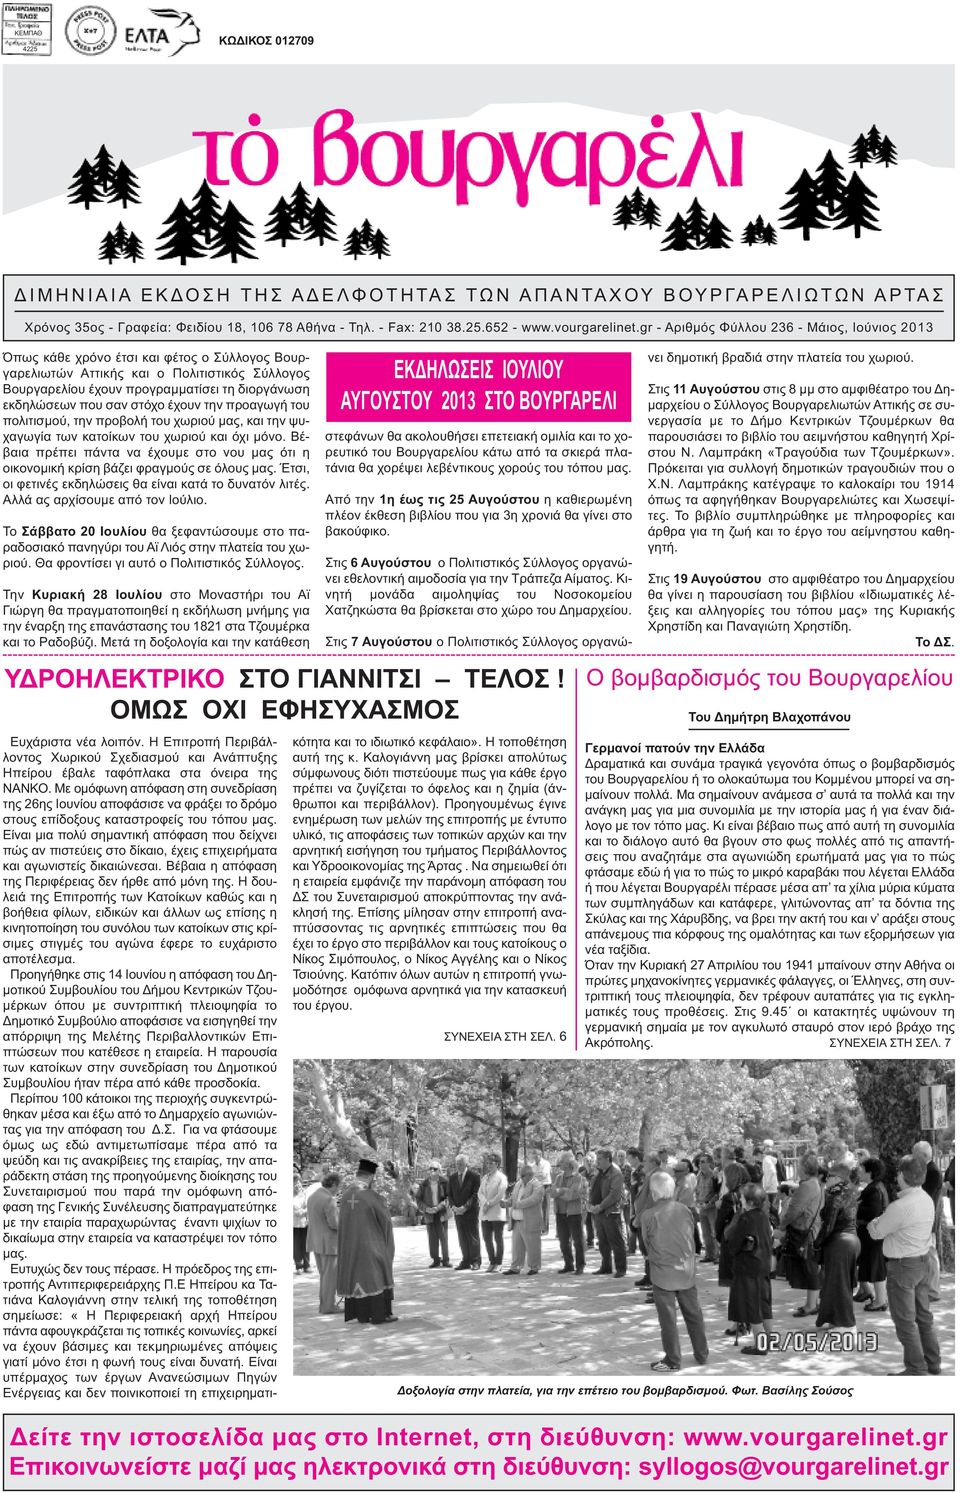 gr - Αριθµός Φύλλου 236 - Μάιος, Ιούνιος 2013 Όπως κάθε χρόνο έτσι και φέτος ο Σύλλογος Βουργαρελιωτών Αττικής και ο Πολιτιστικός Σύλλογος Βουργαρελίου έχουν προγραµµατίσει τη διοργάνωση εκδηλώσεων